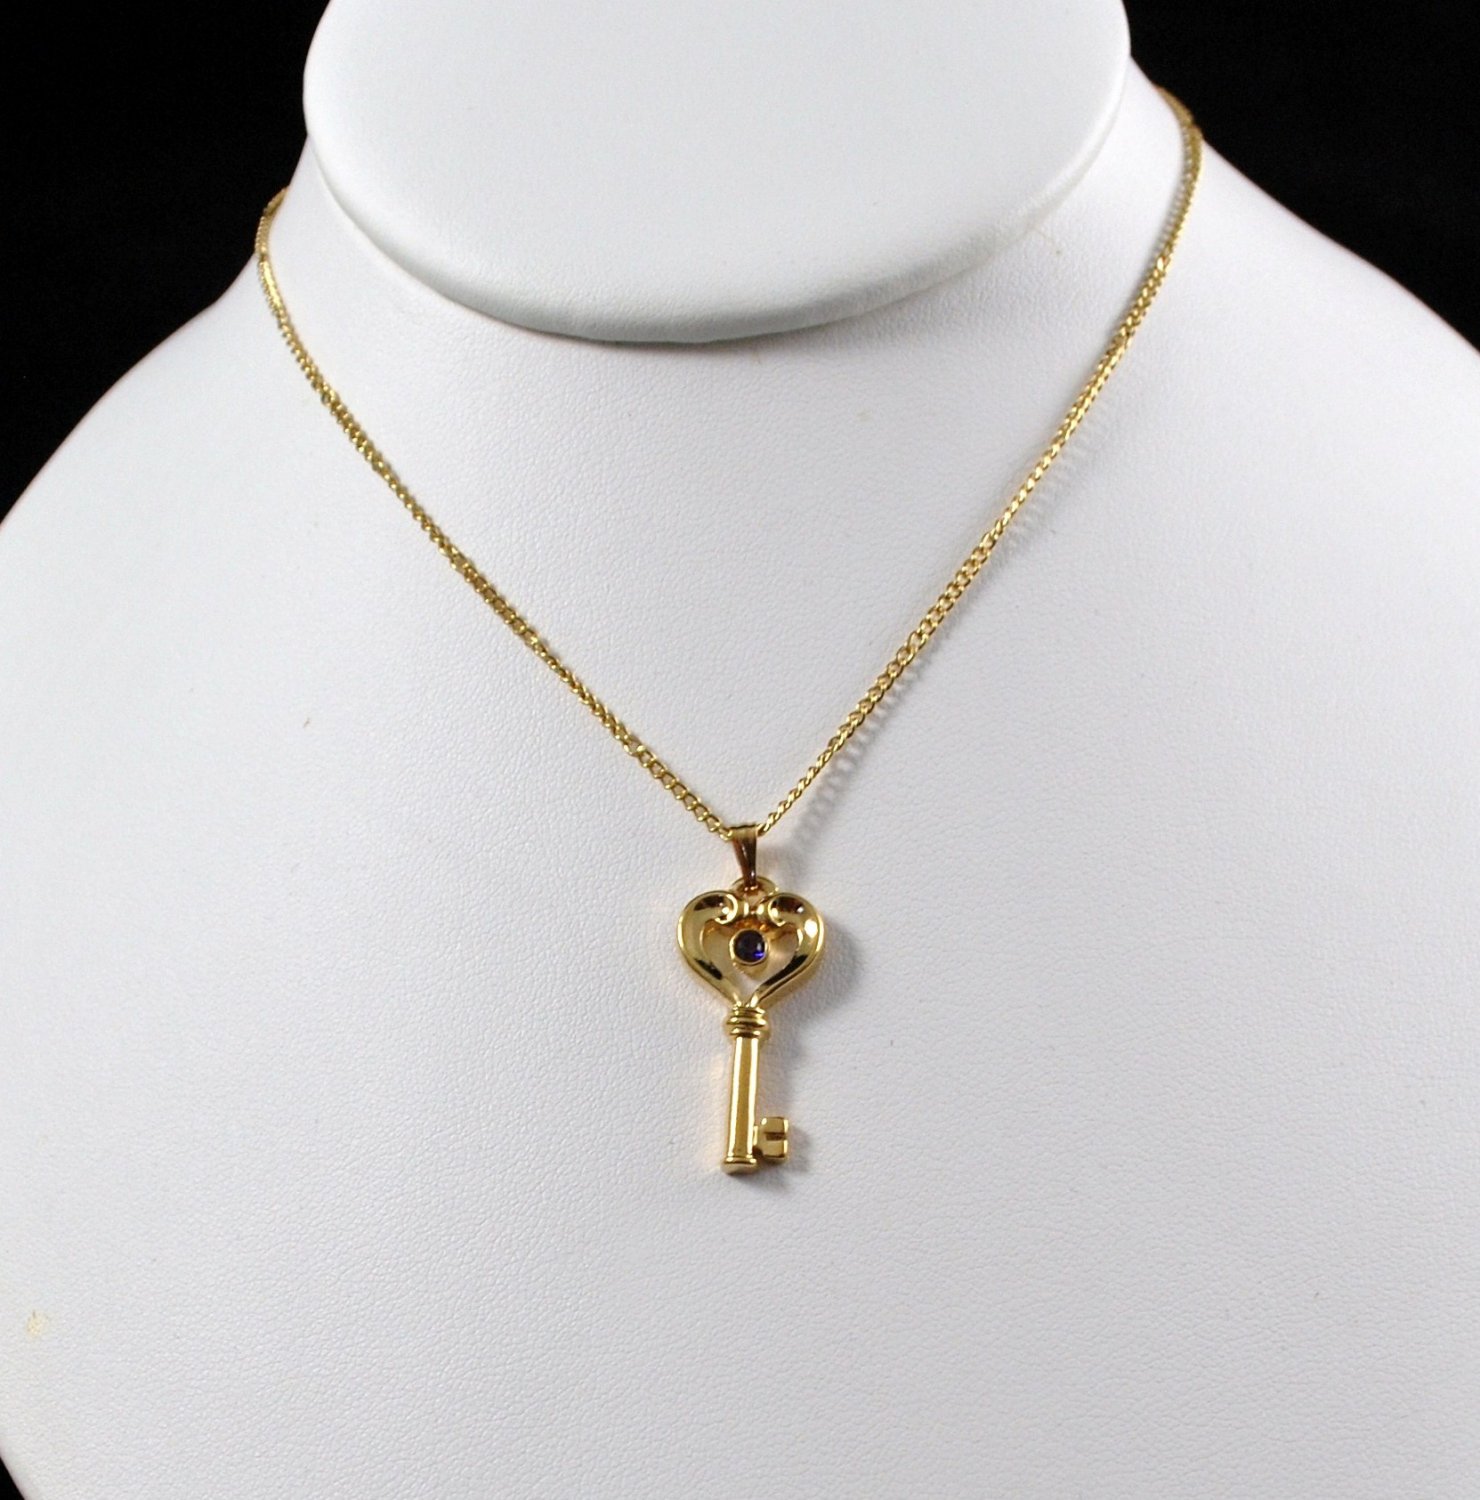 1989 Avon Jewelry Sparkling Heart Key Pendant Necklace